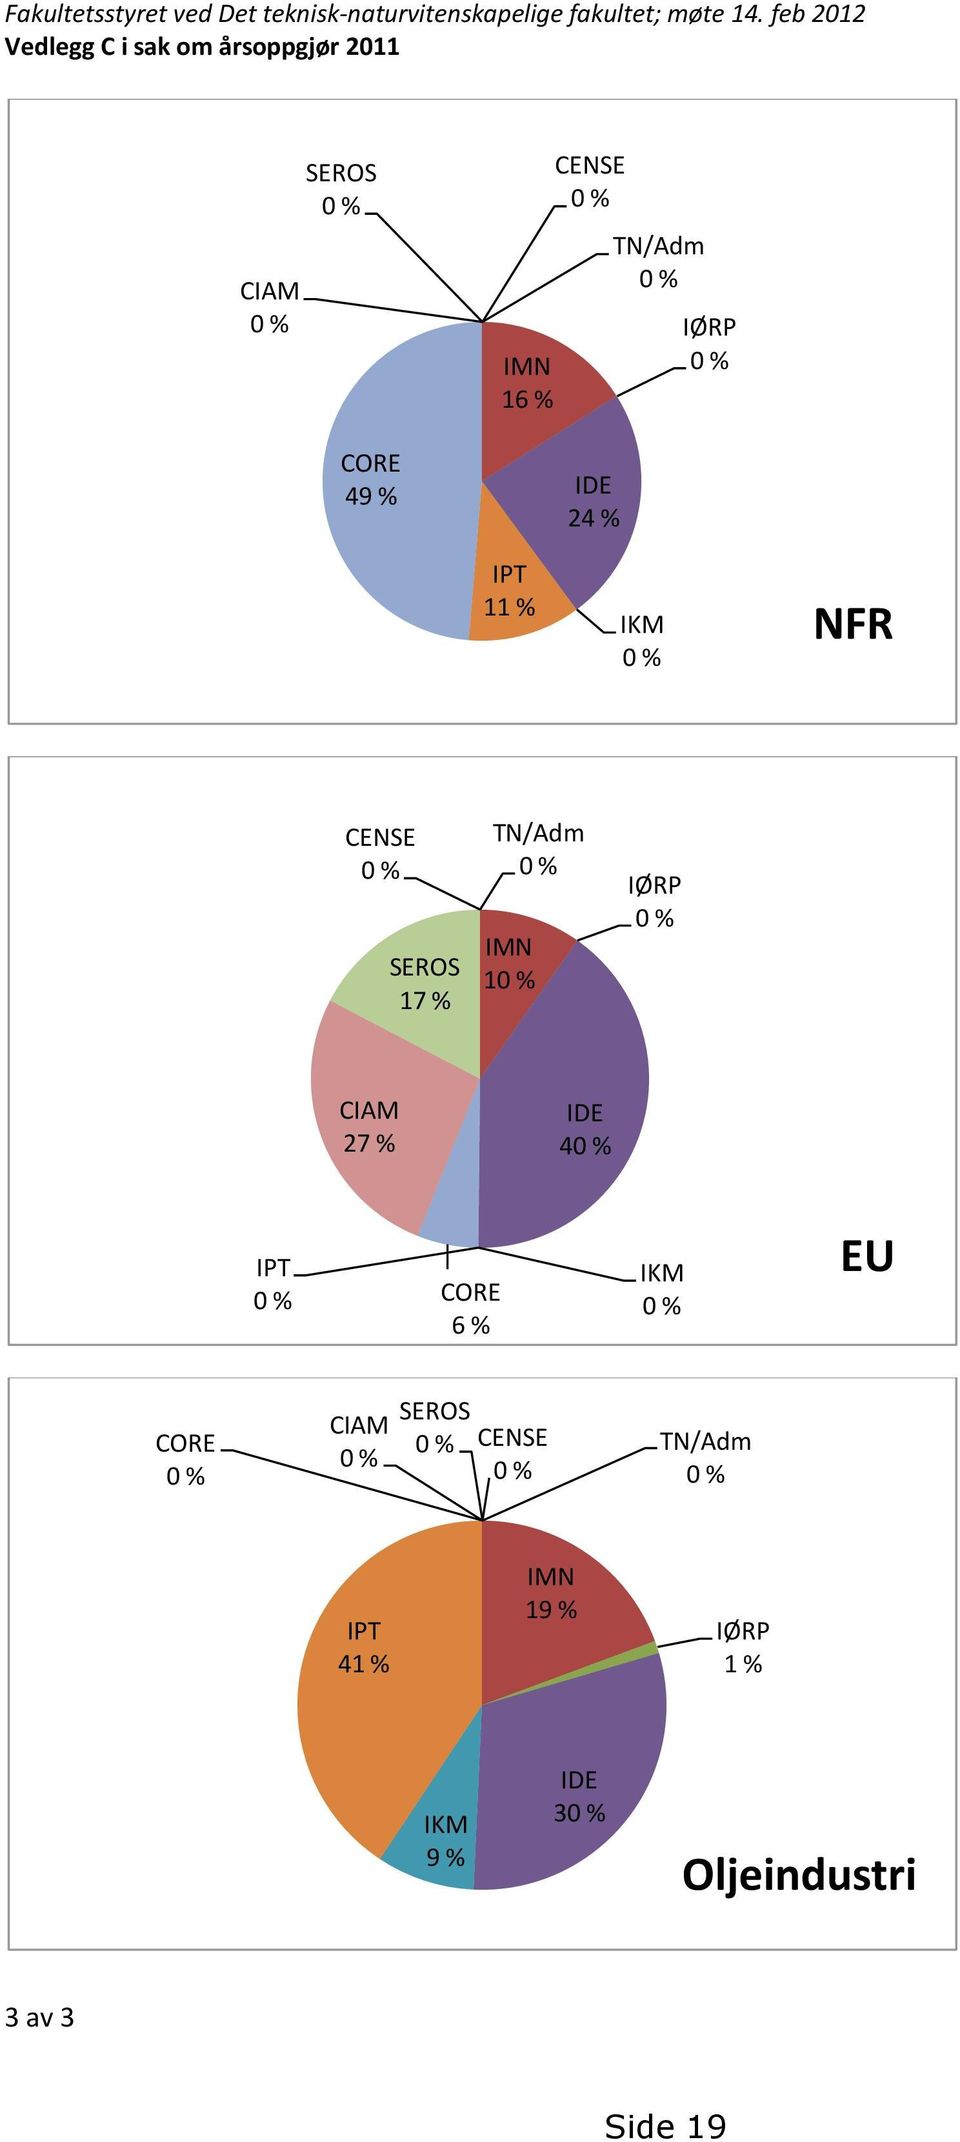 0 % IØRP 0 % IPT 11 % IKM 0 % NFR CENSE 0 % SEROS 17 % TN/Adm 0 % IMN 10 % IØRP 0 % CIAM 27 % IDE 40 % IPT